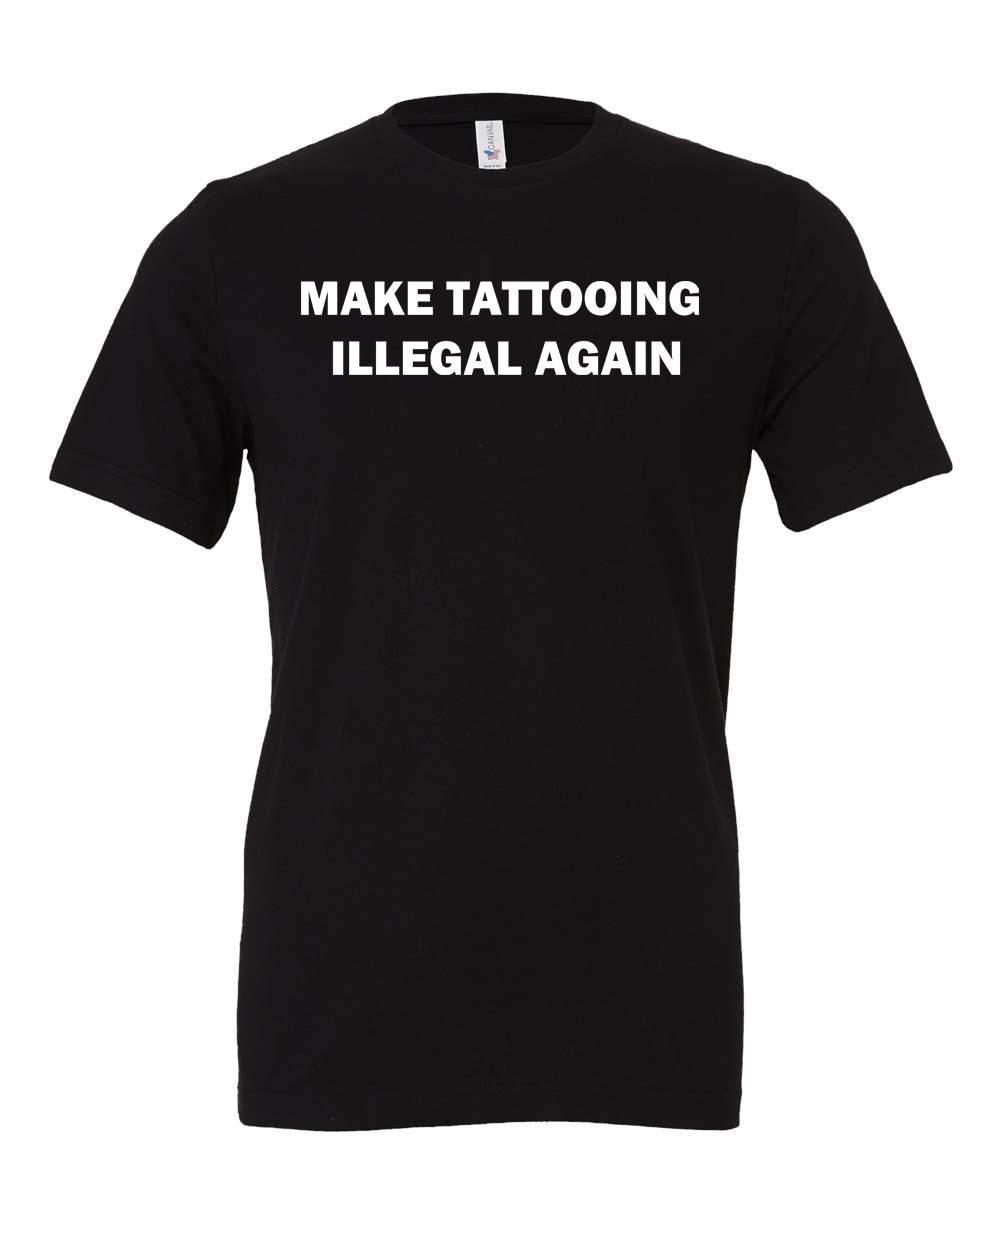 Danktattoomeme “Make Tattooing Illegal Again” Unisex T-Shirt